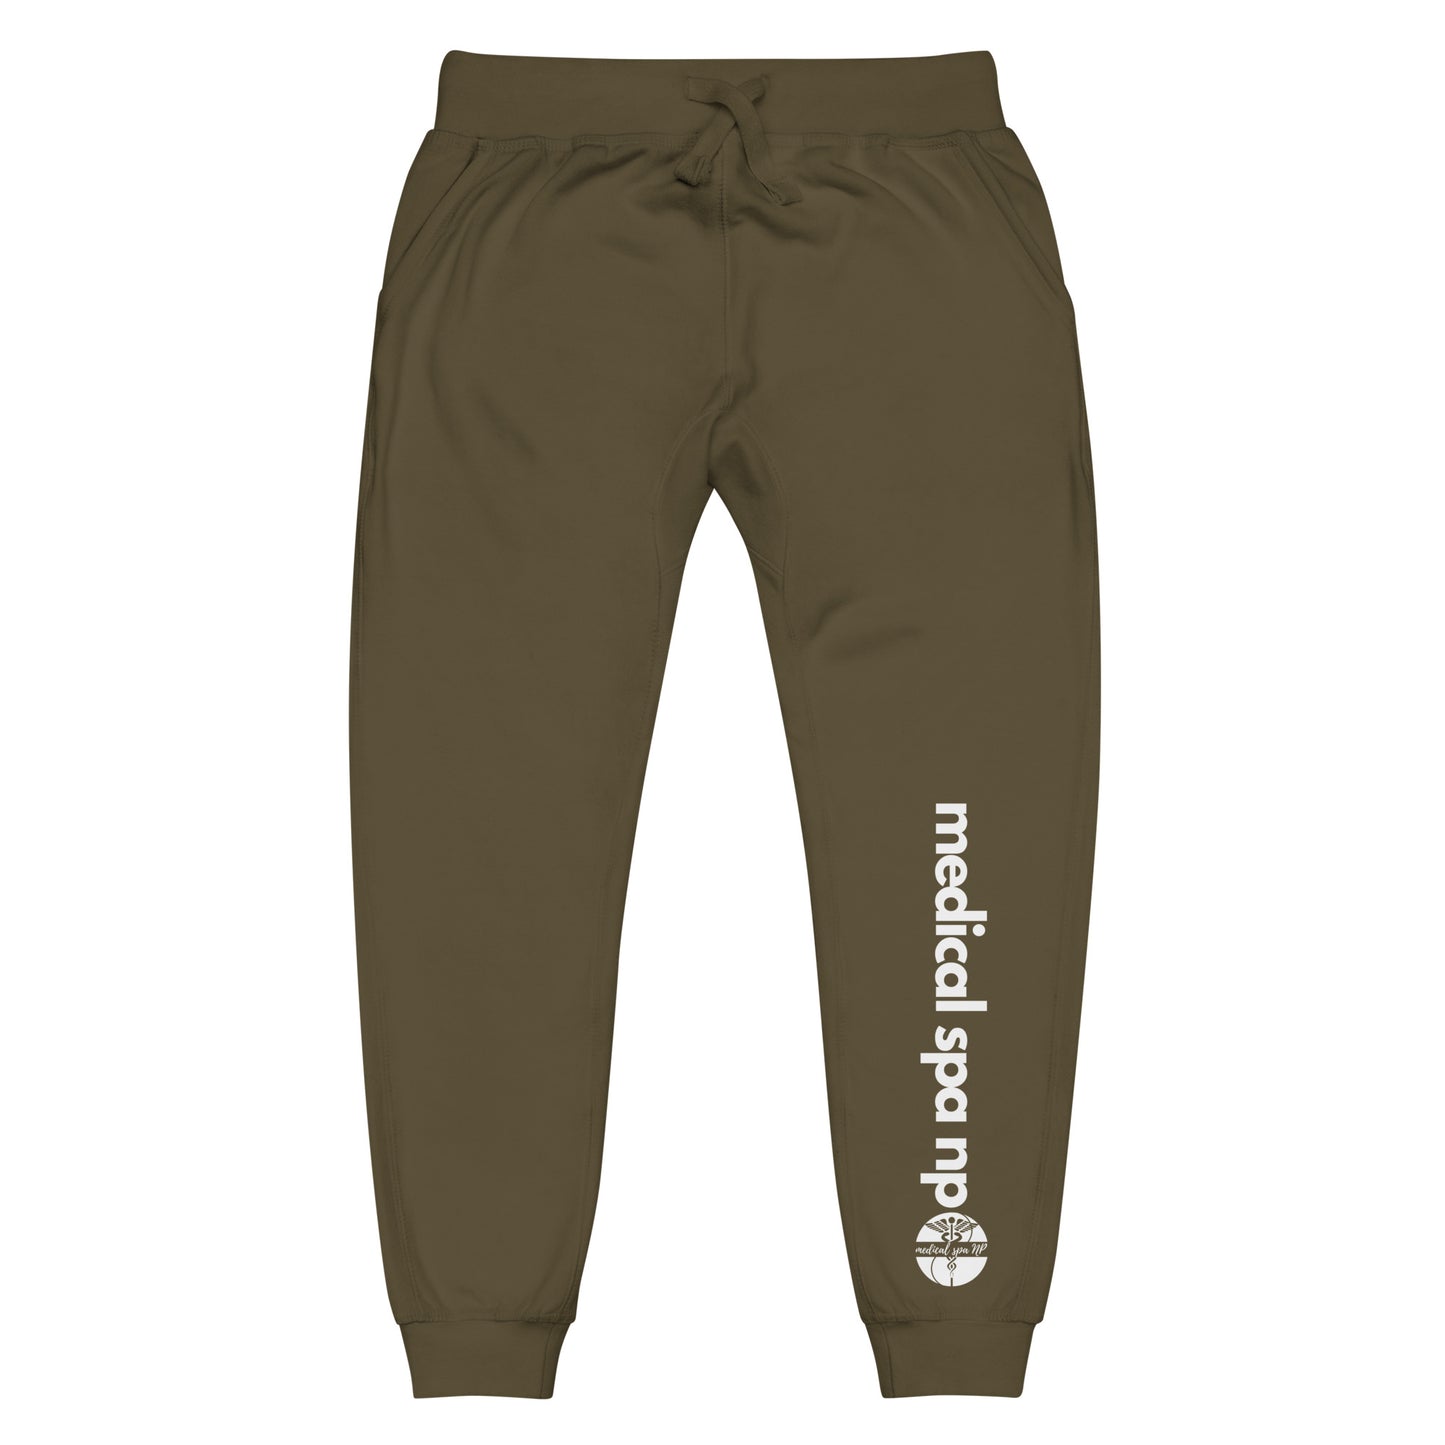 Unisex fleece sweatpants- perfect for winter!